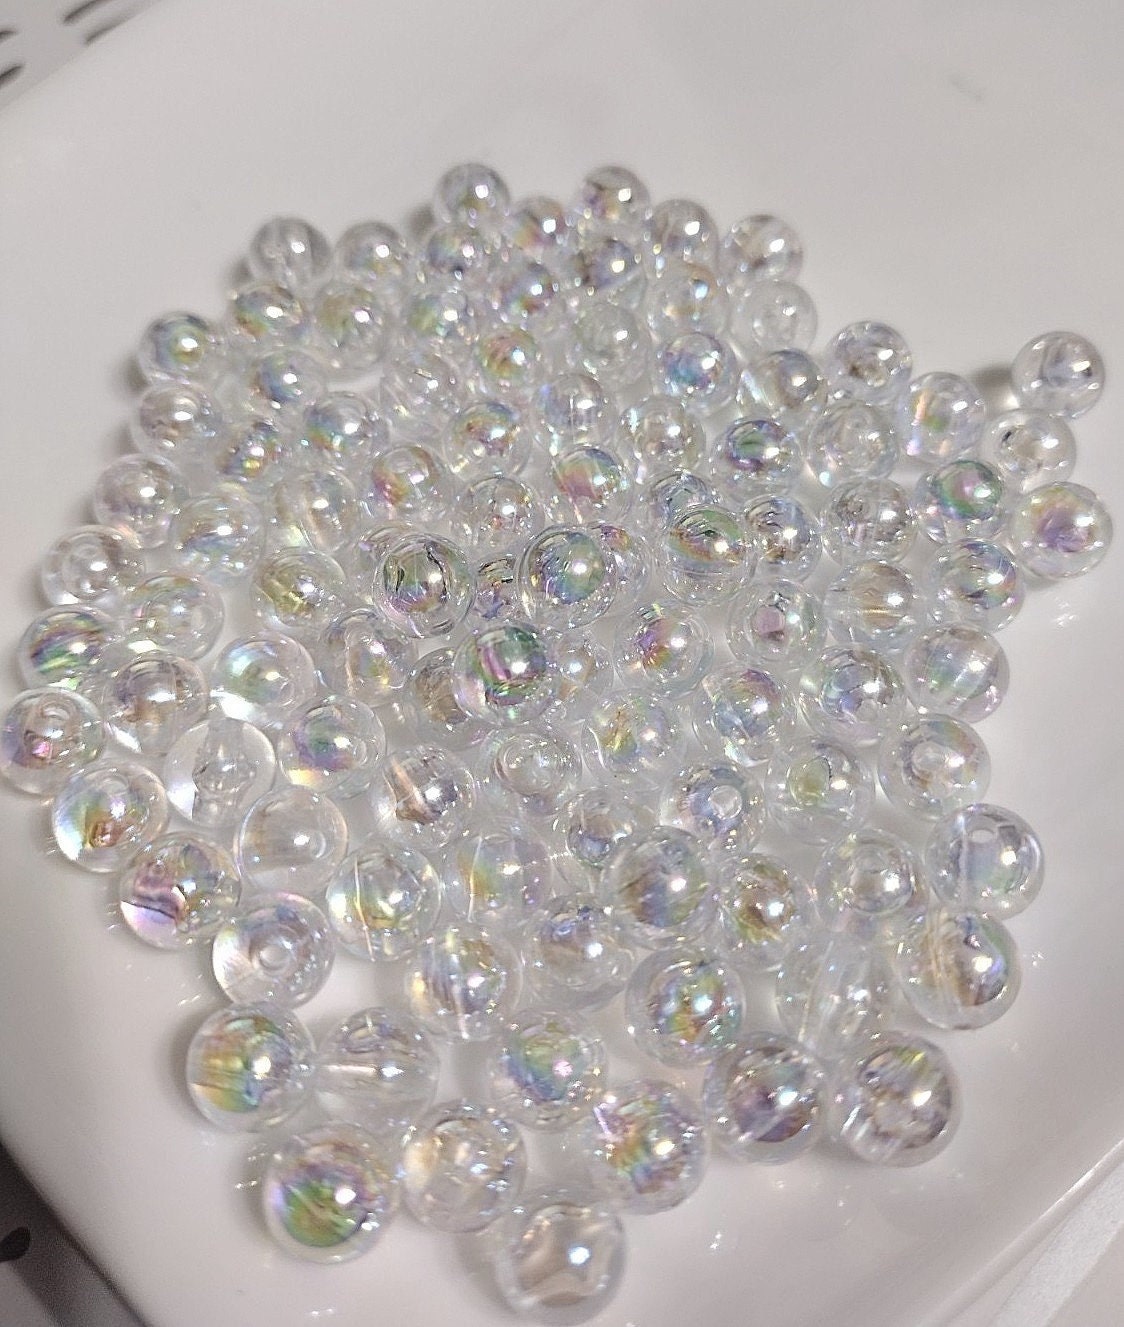 25 GM 8 mm Donut Shaped Plastic Beads Mix Lot